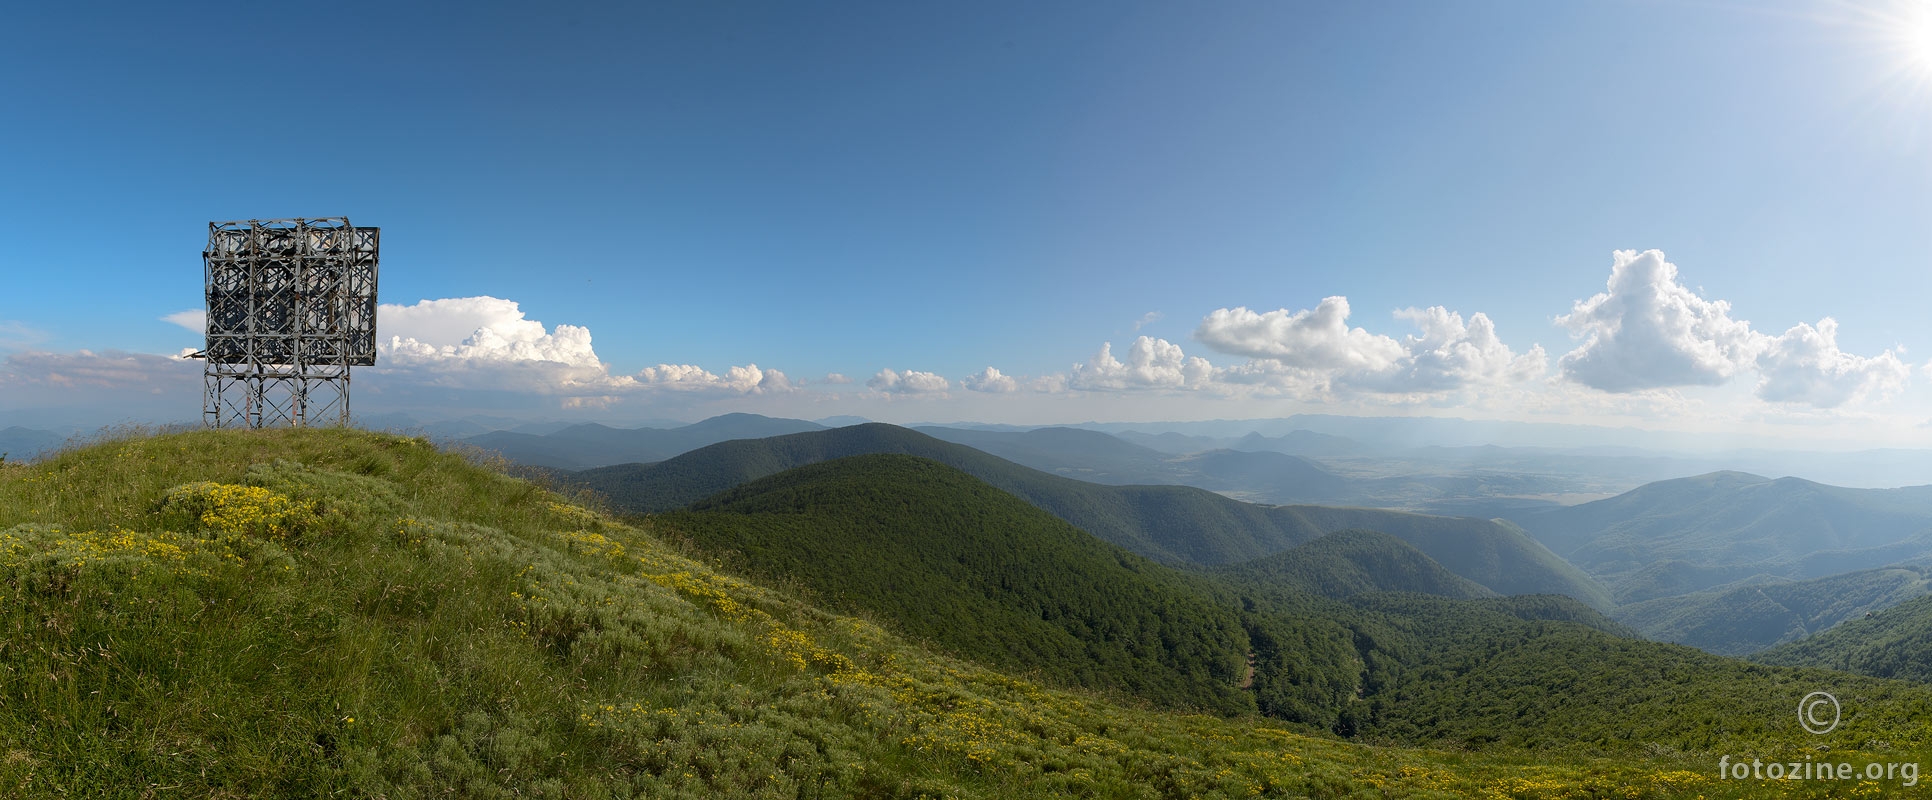 Panorama s Ozeblina